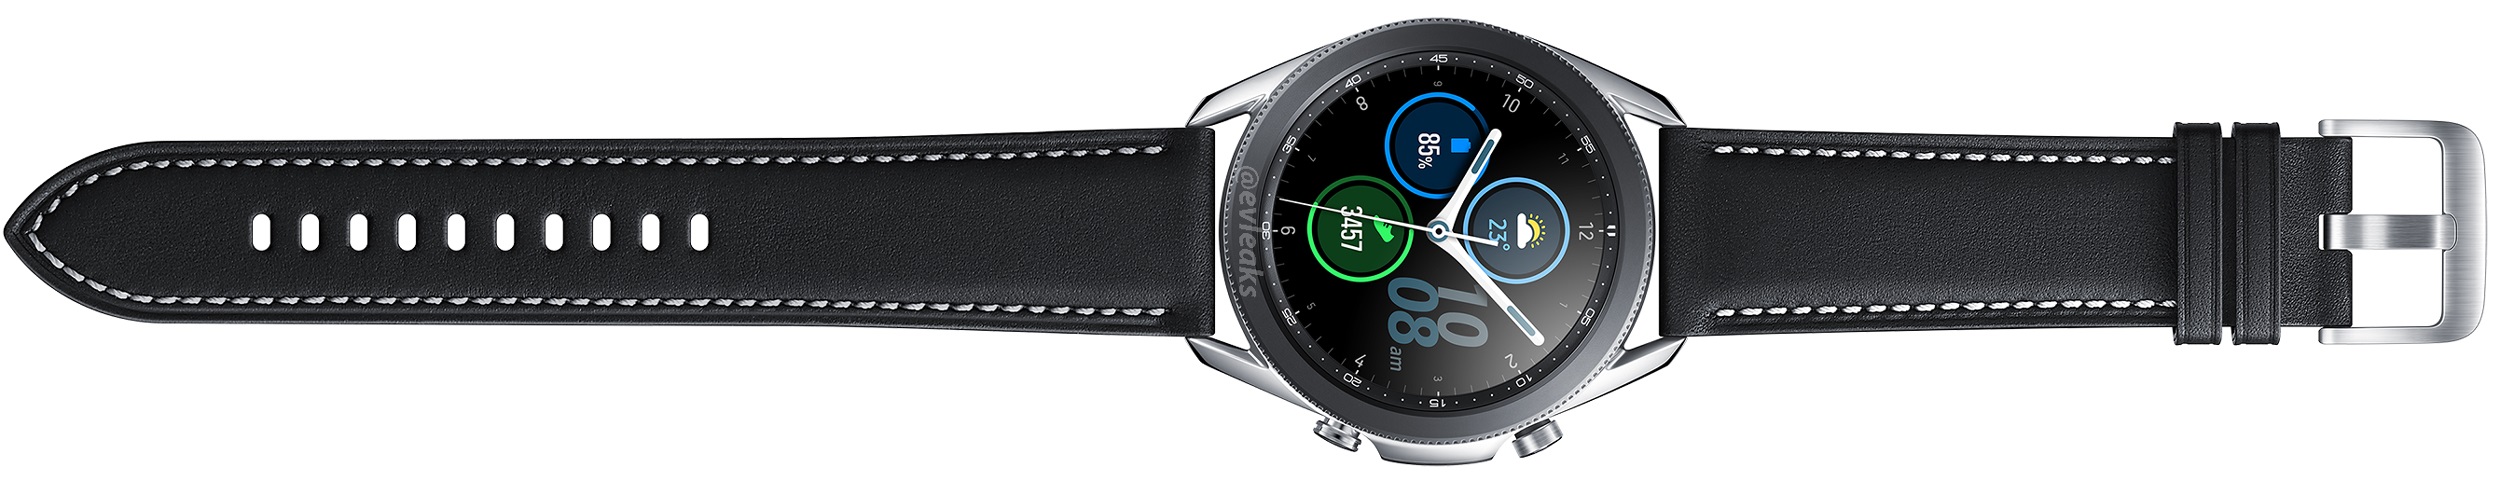 Samsung Galaxy Watch 3 smartwatch